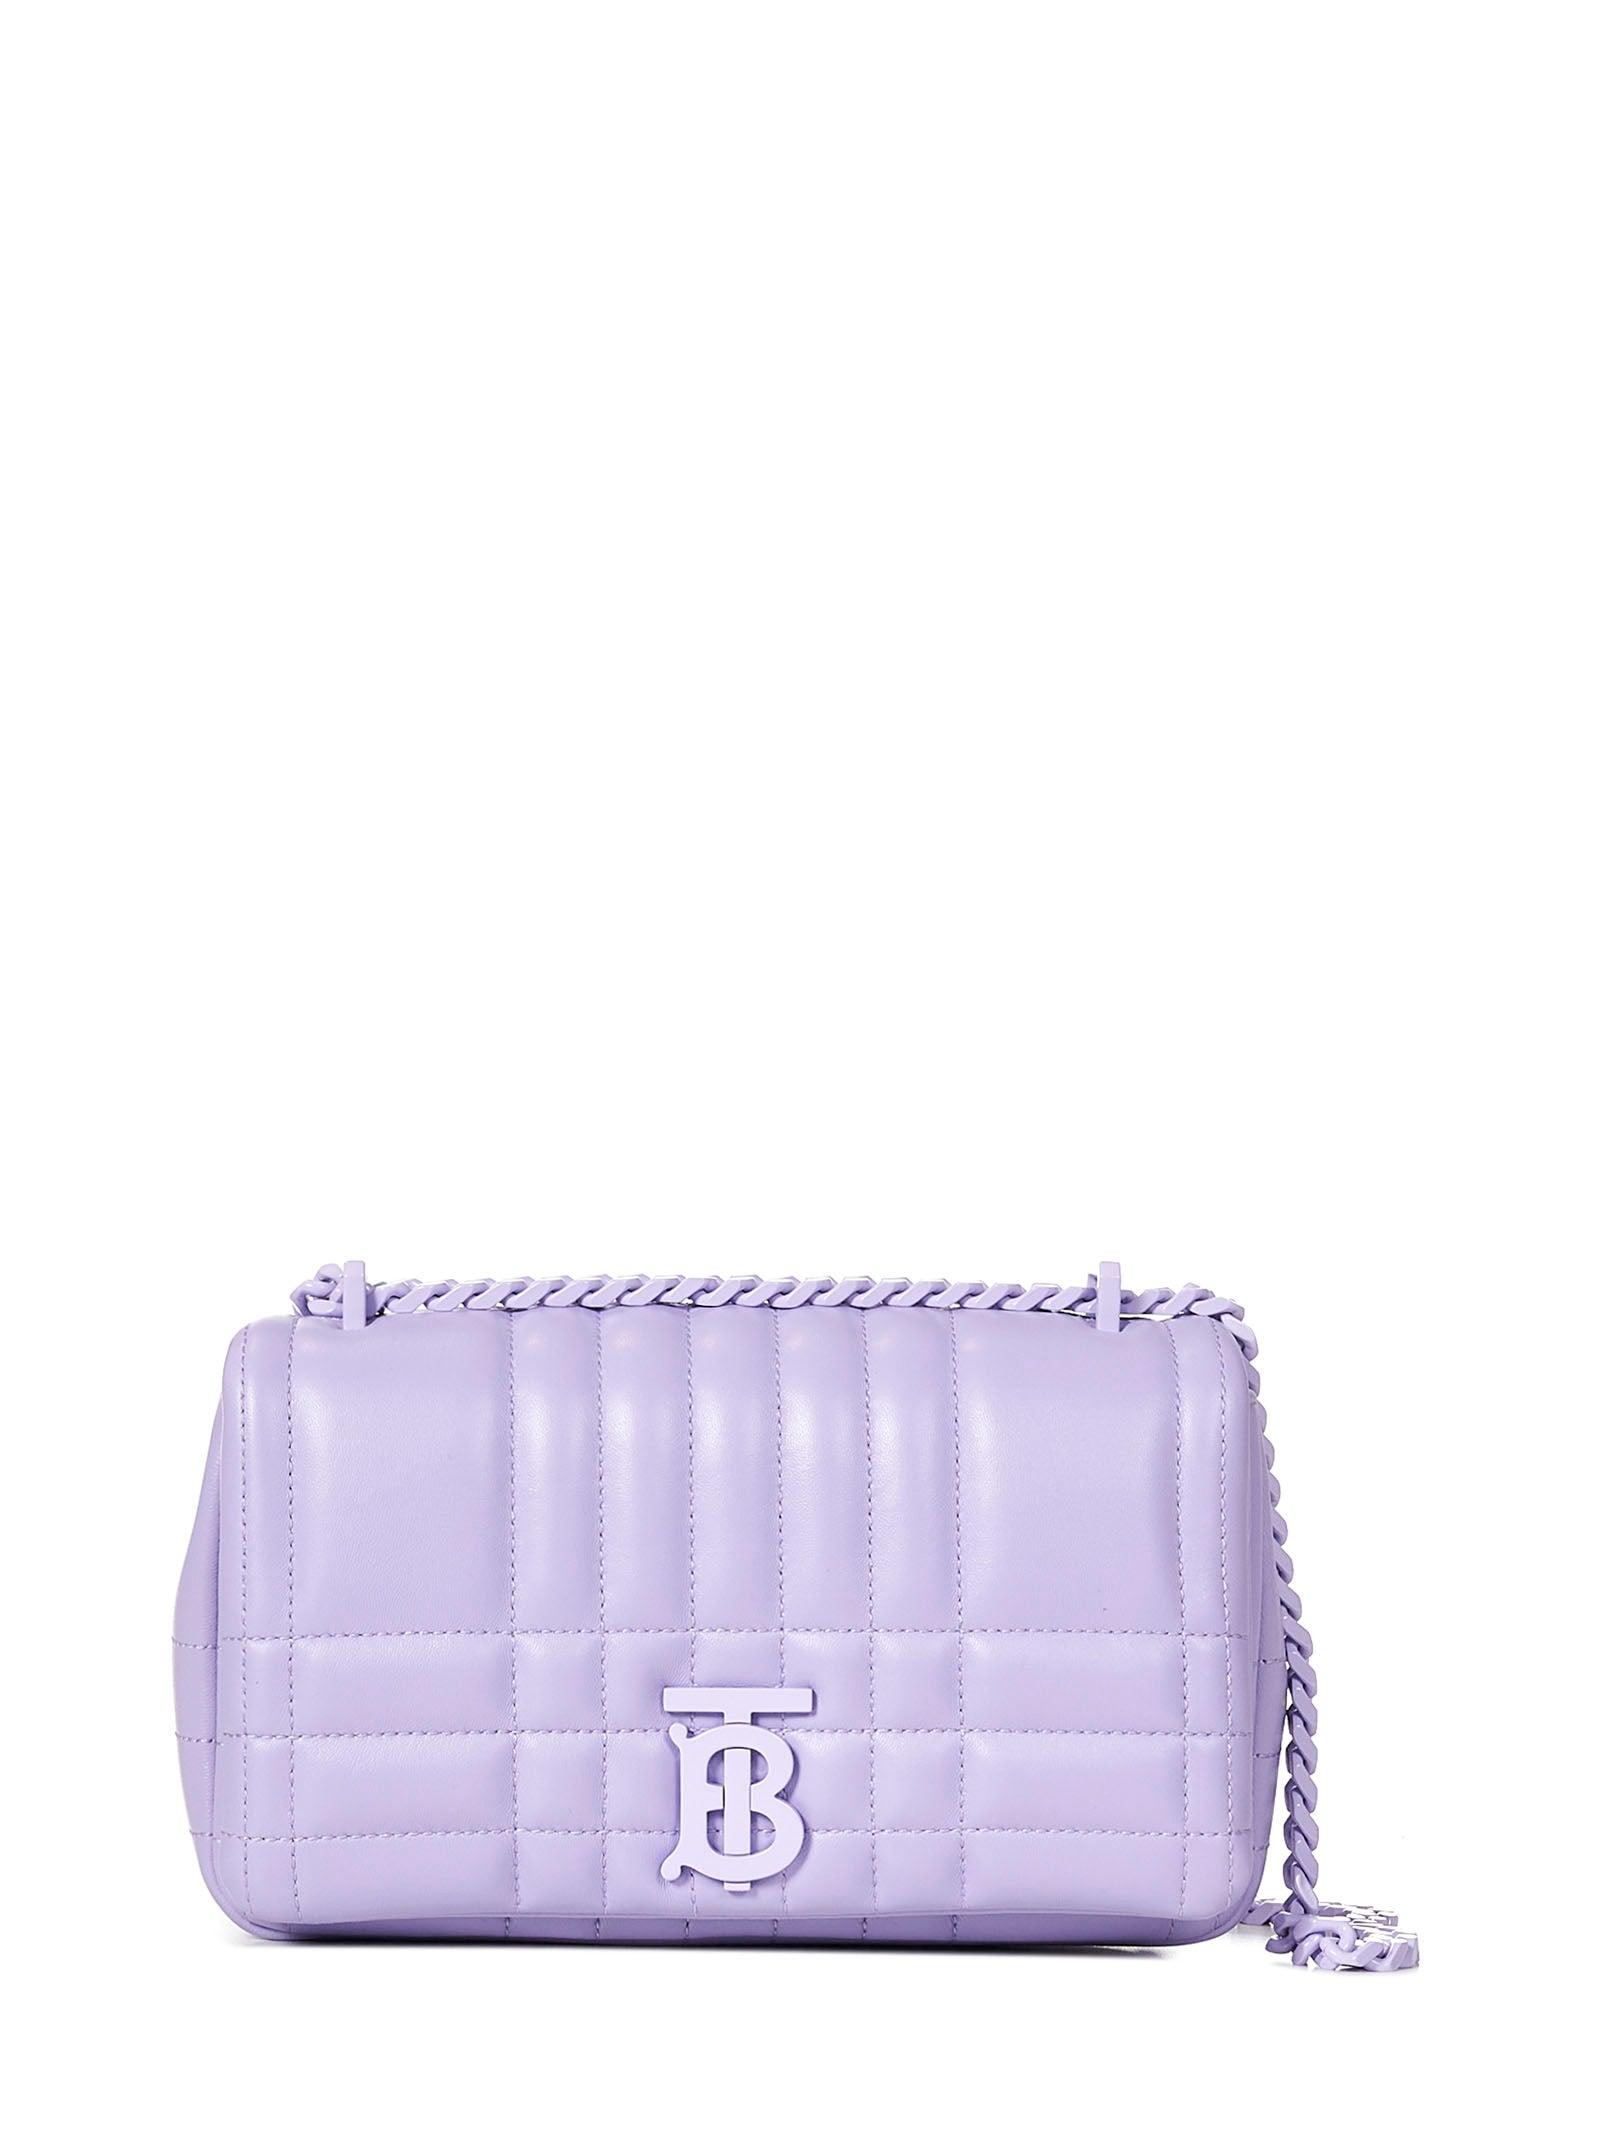 Burberry Nova Check Lunch Box - Purple Shoulder Bags, Handbags - BUR104362